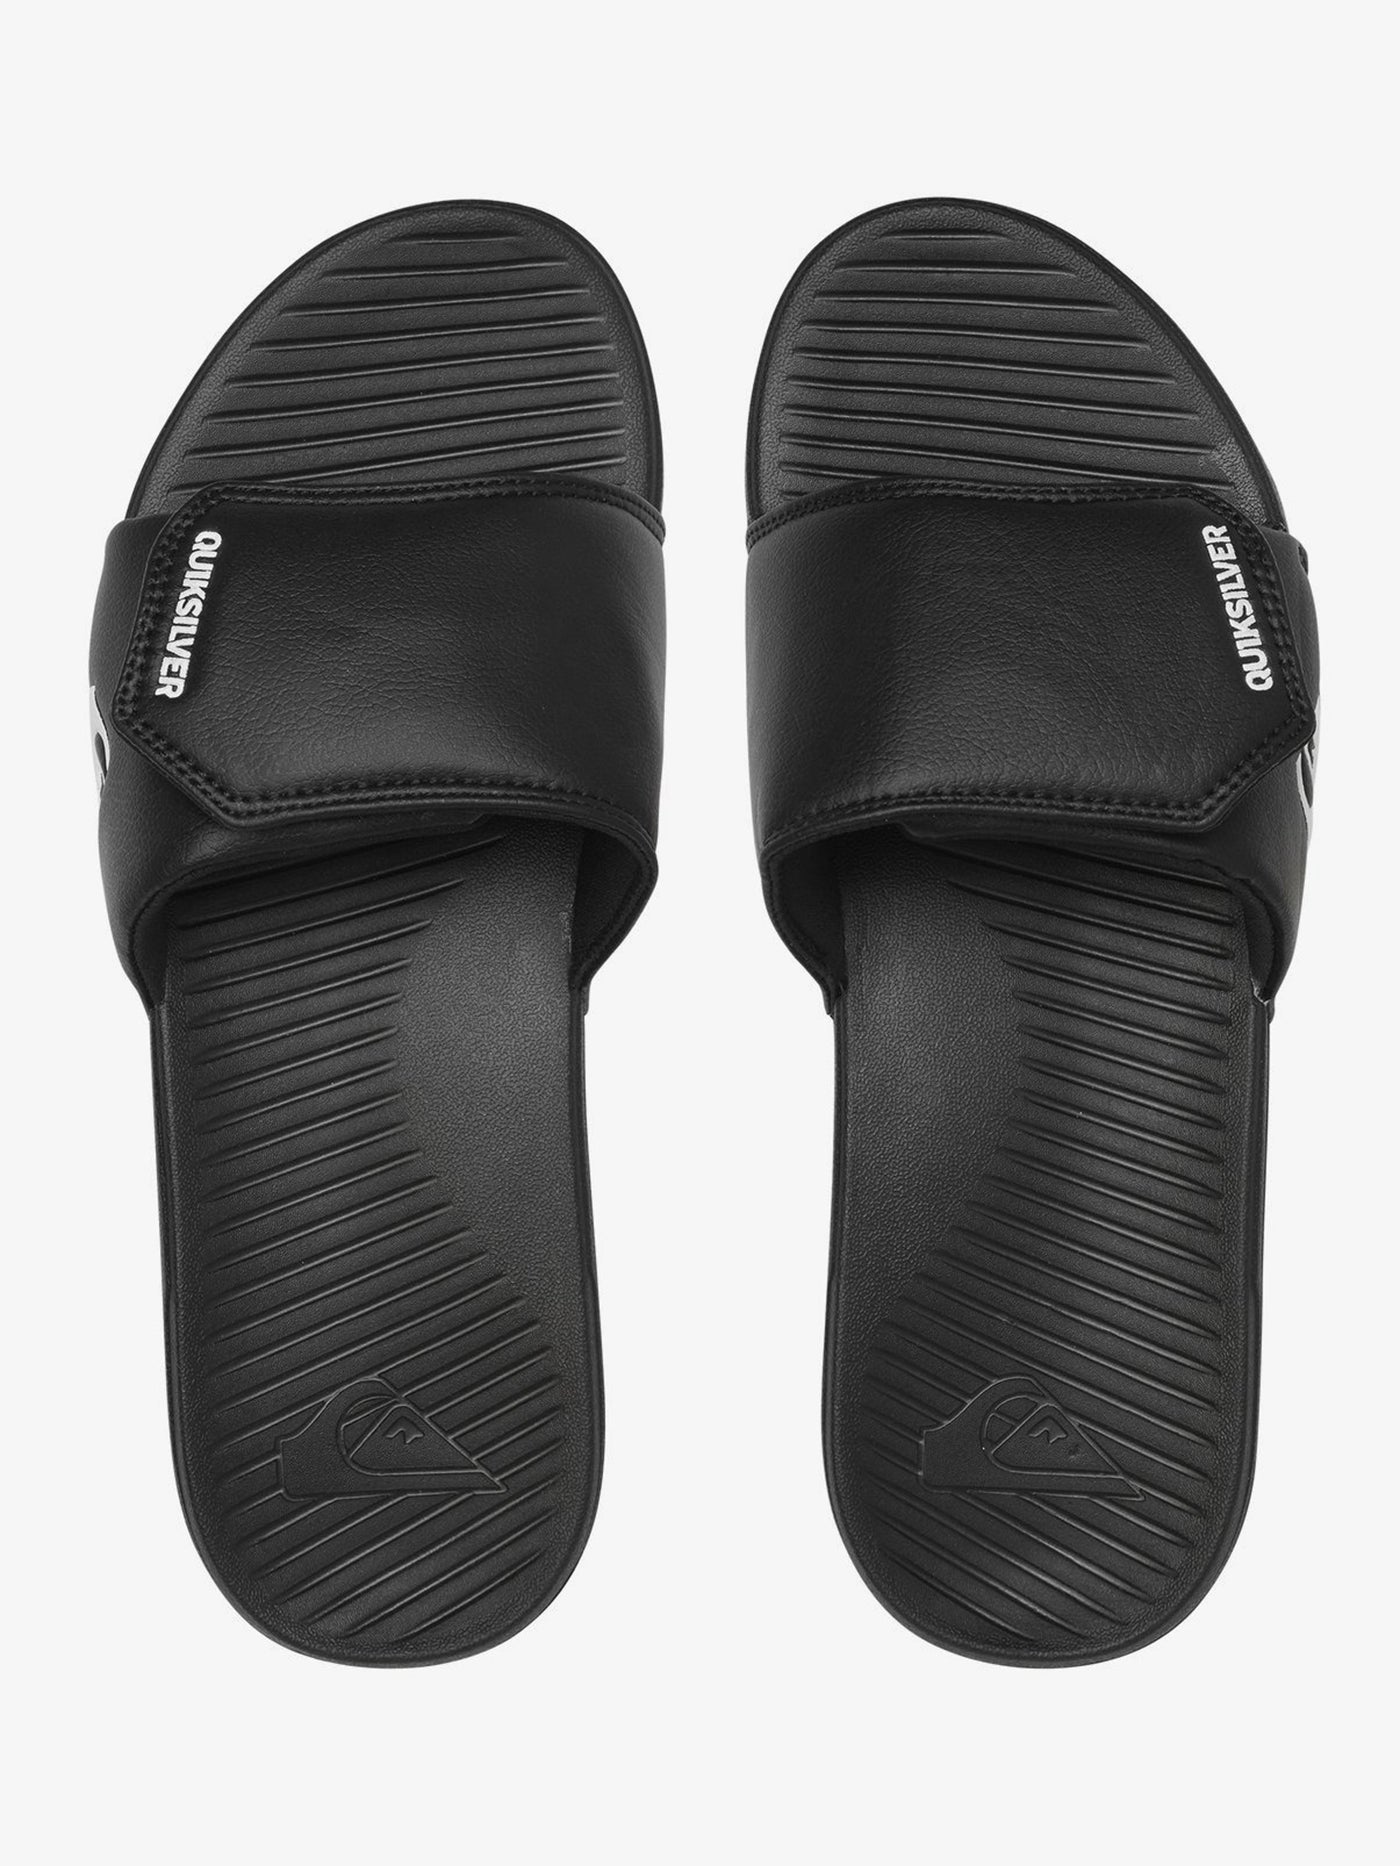 Quiksilver Bright Coast Adjust Black/White/Black Sandals